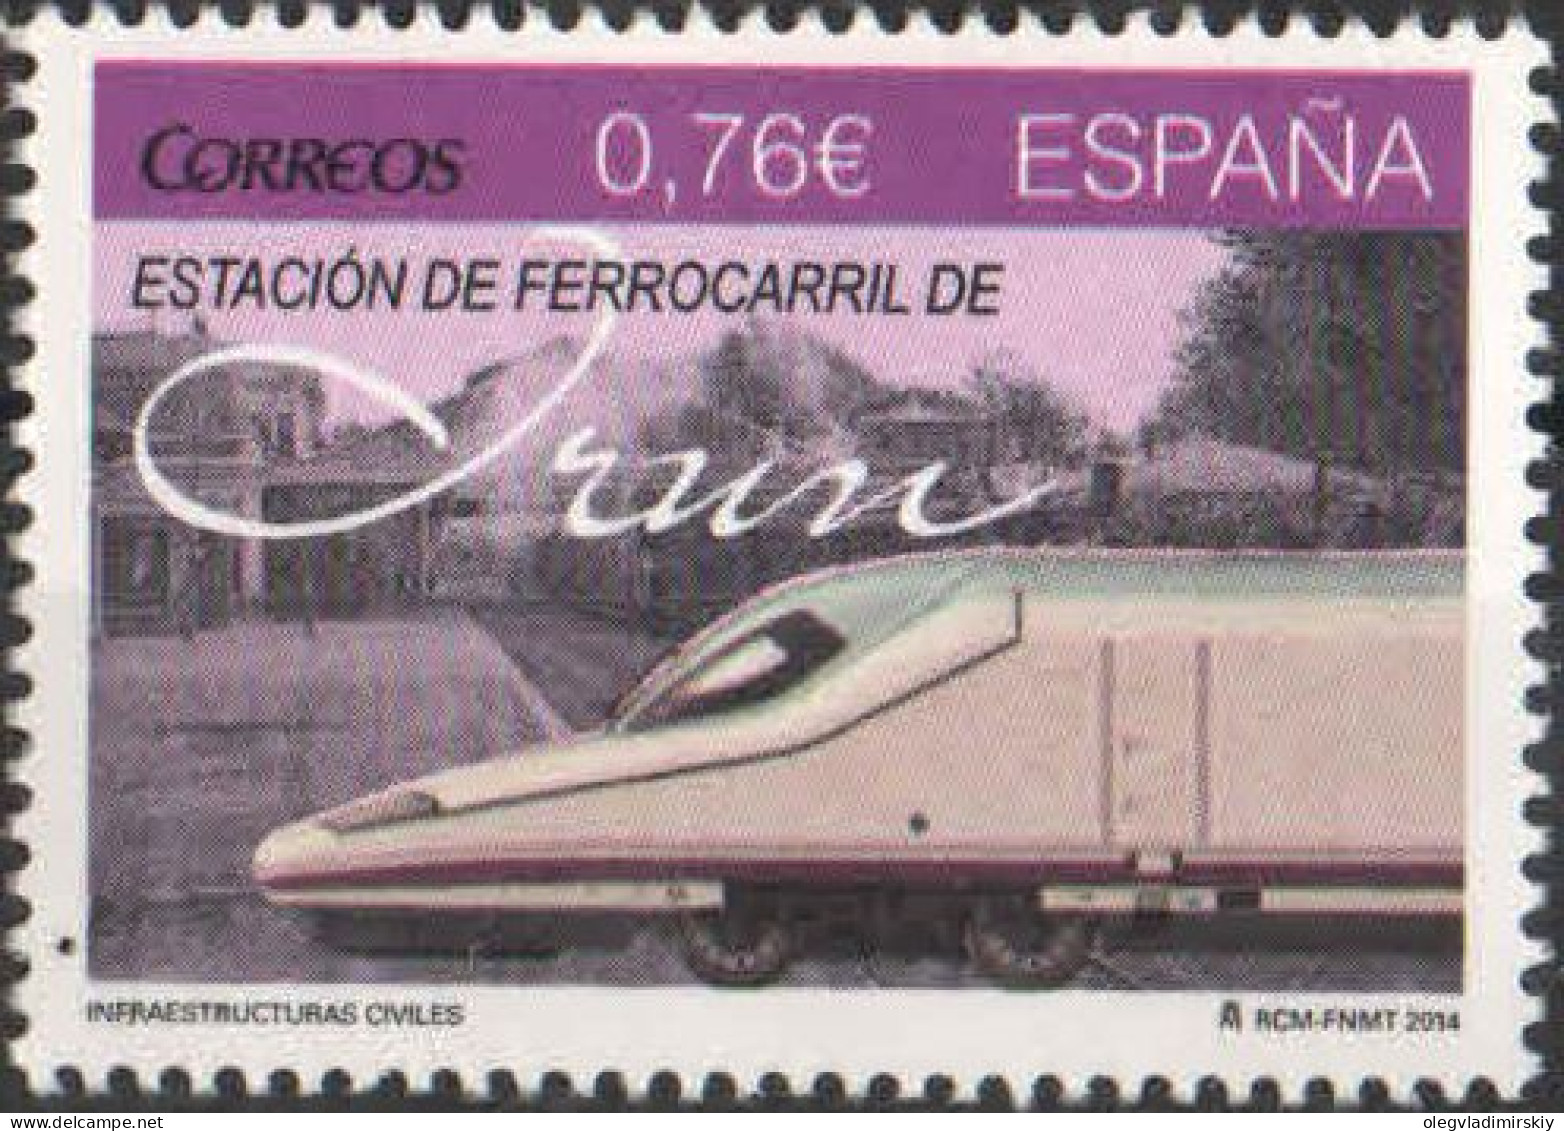 Spain Espagne Spanien 2014 Madrid-Irun Railway Line Train Stamp MNH - Unused Stamps